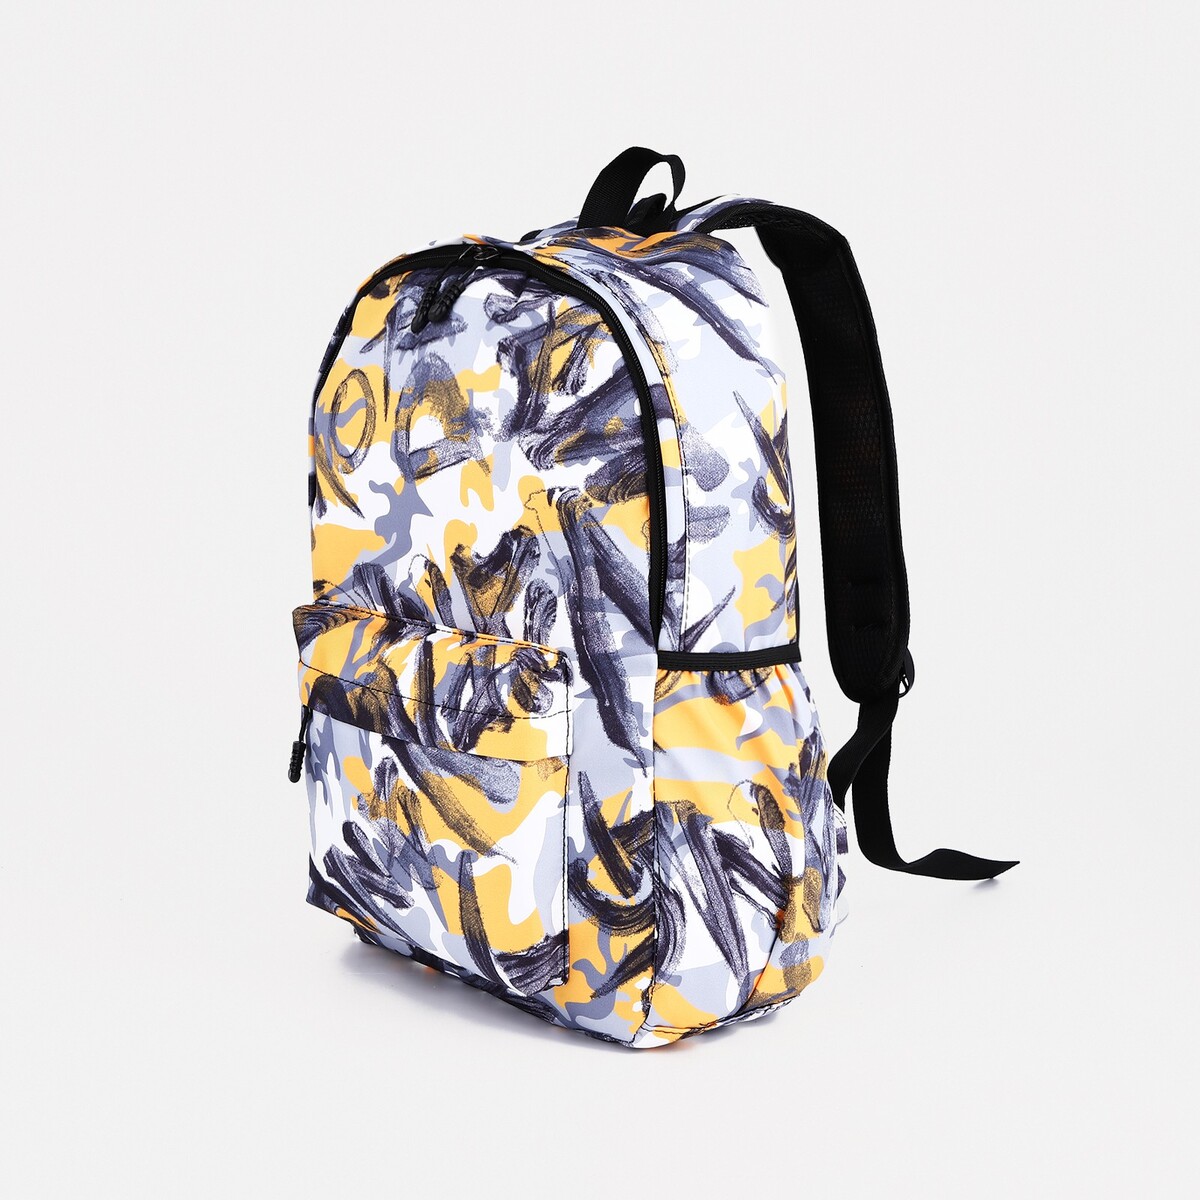 Рюкзак школьный из текстиля на молнии, 3 кармана, цвет желтый/серый рюкзак hike pack 27 желтый